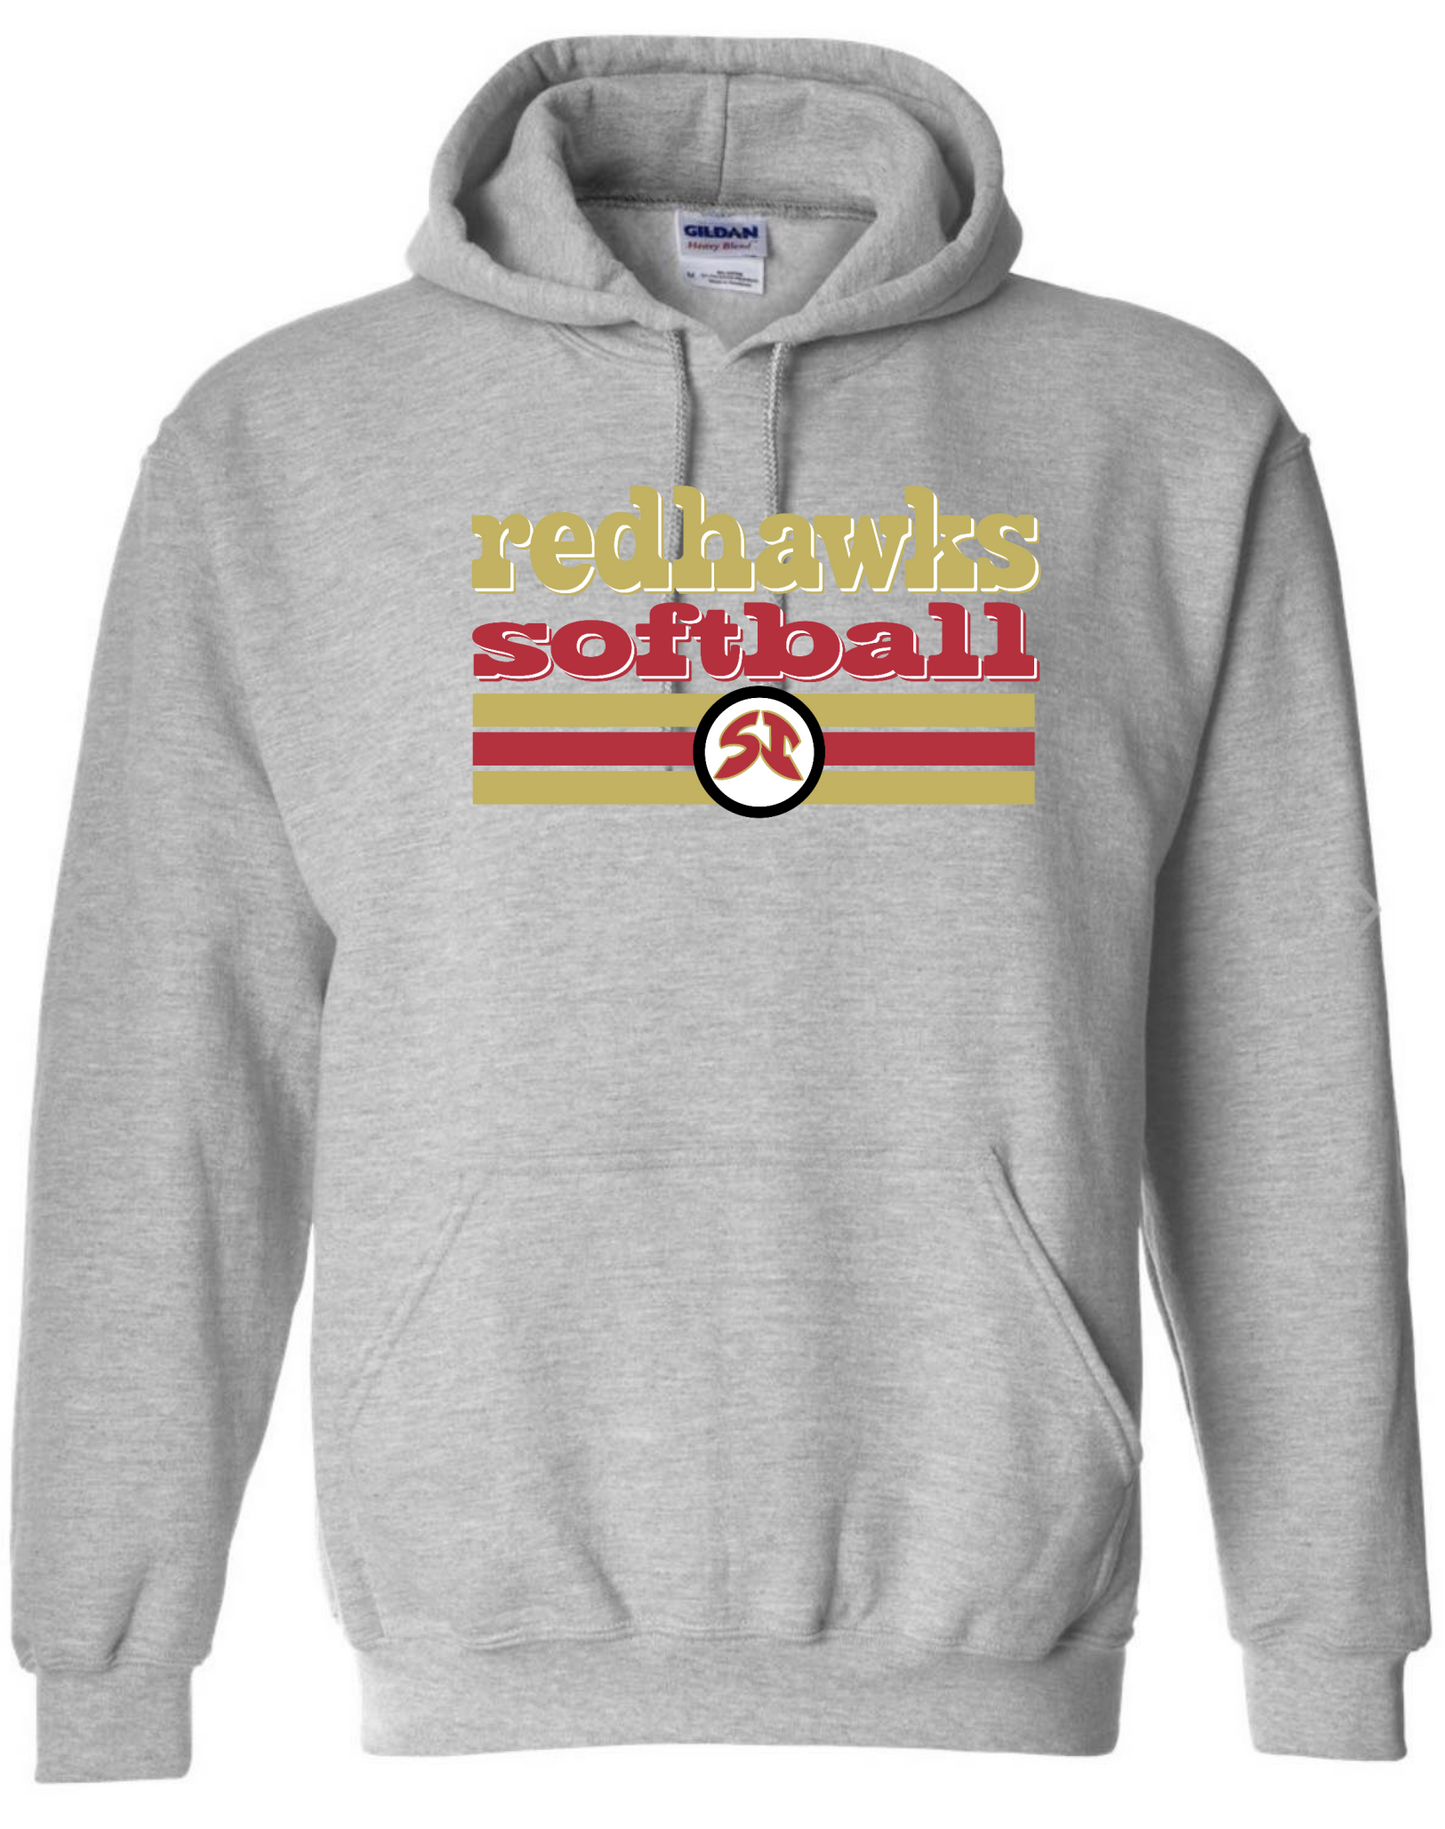 Redhawks Softball Hoodie